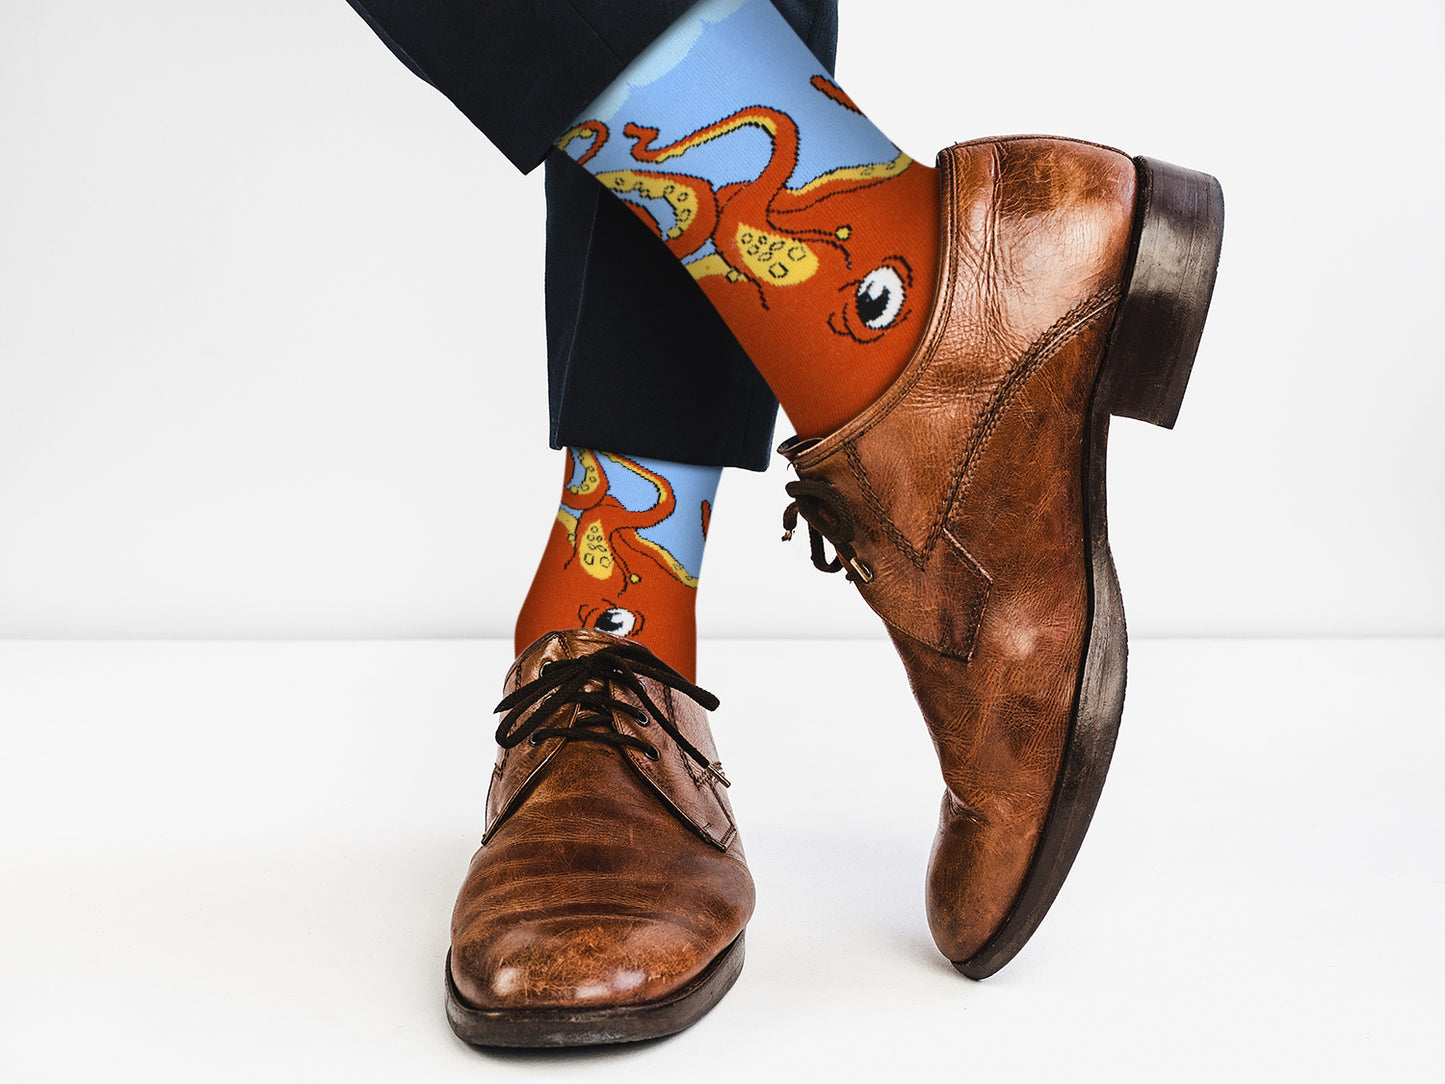 Sick Socks - Octopus (Orange) - Trippy Animal Dress Socks